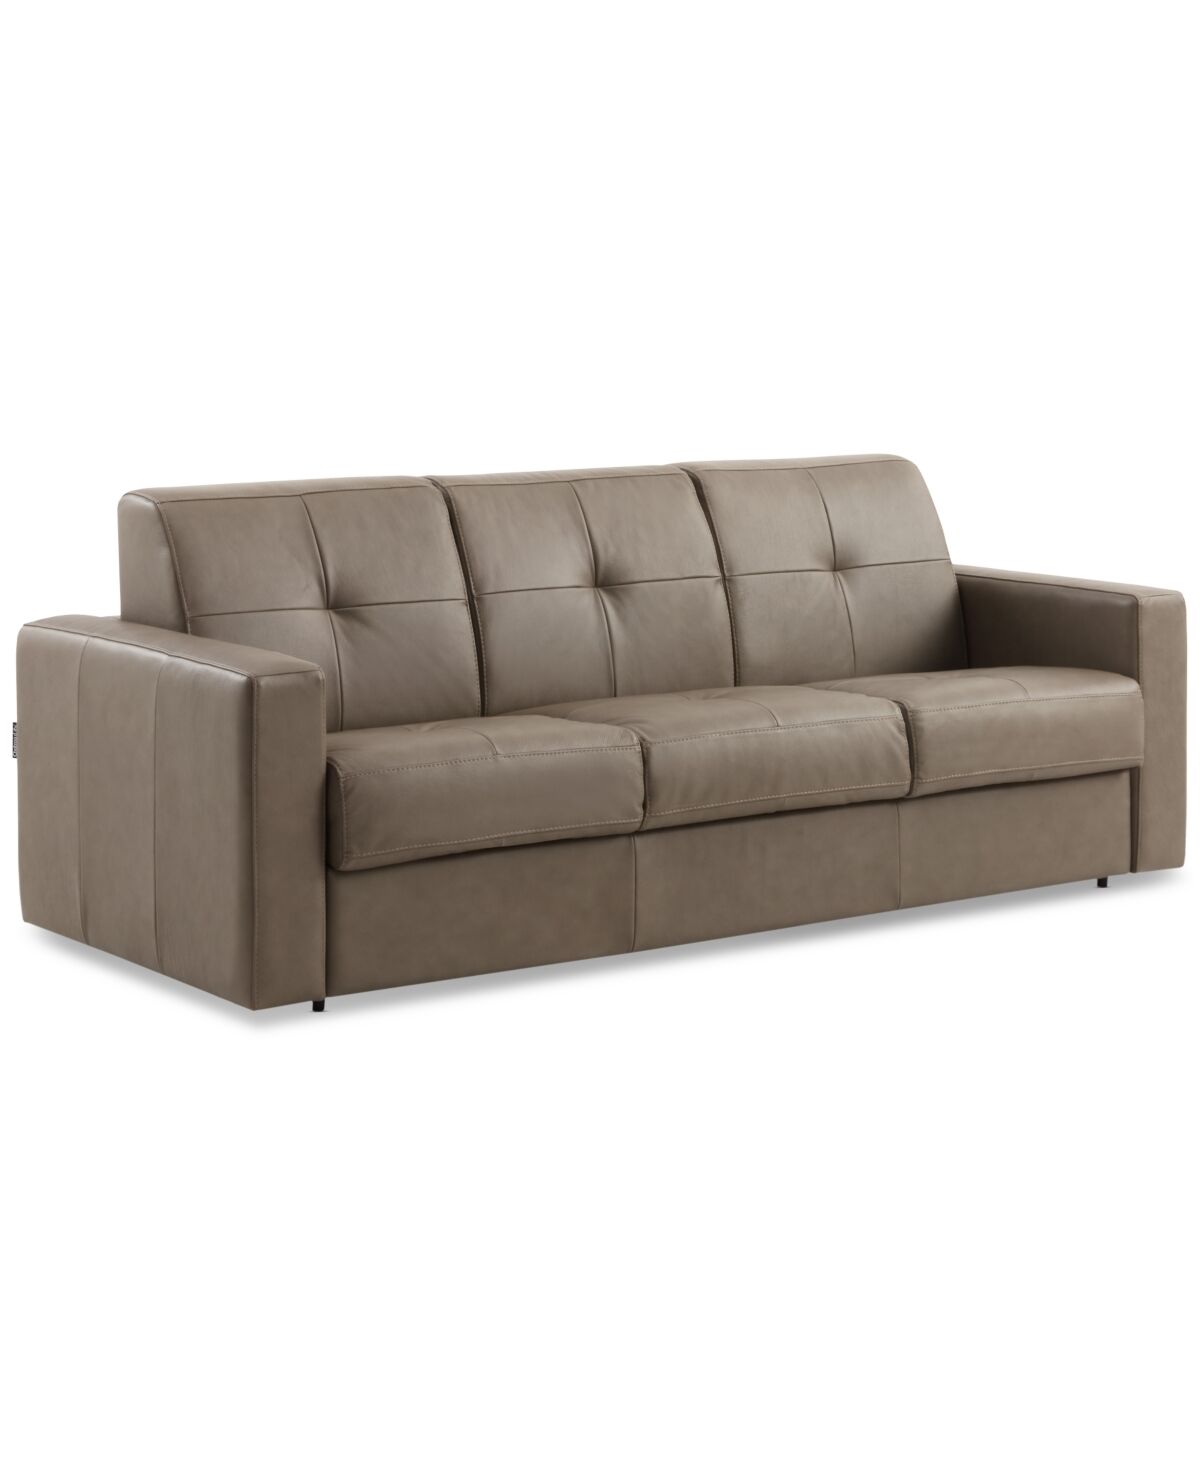 Furniture Shevrin Leather Sleeper Sofa, Created for Macy's - Taupe